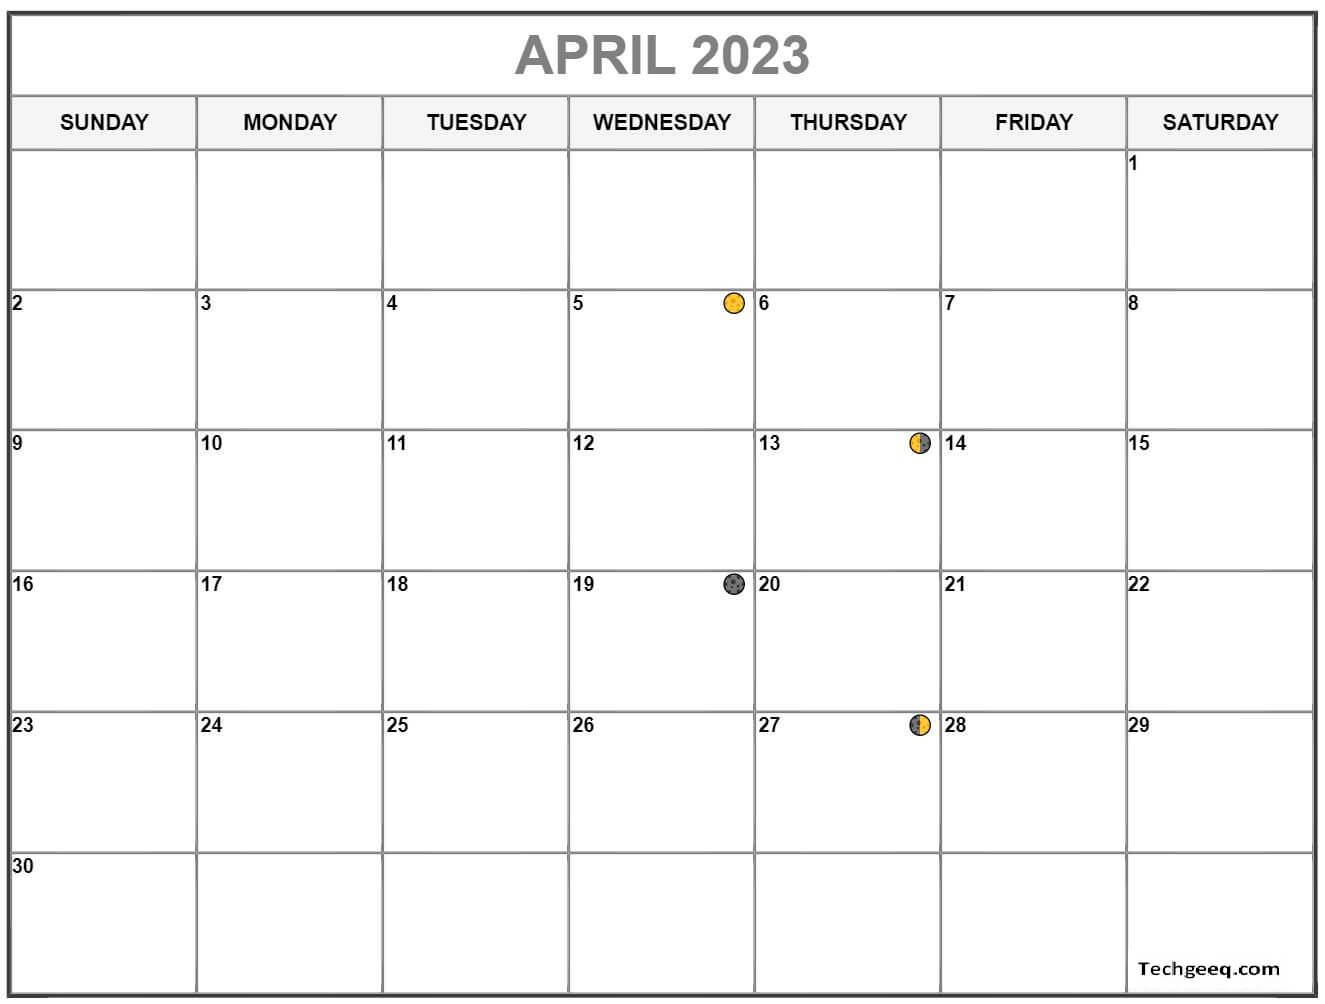 April 2023 Lunar Calendar Template